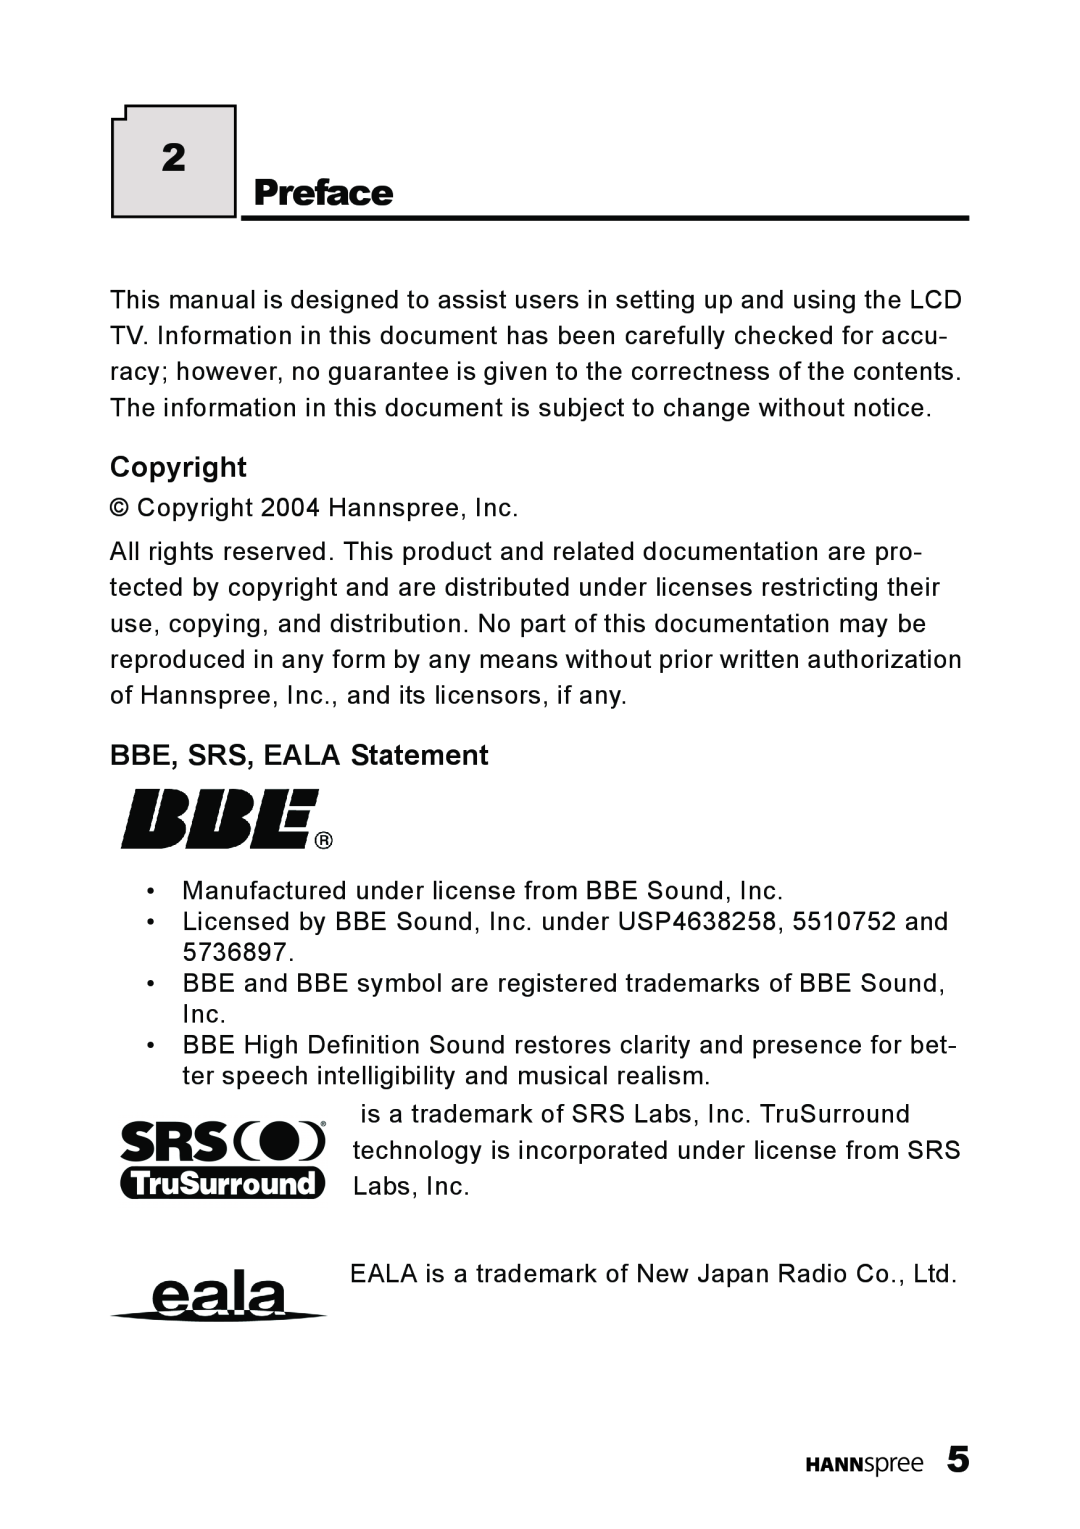 HANNspree LT11-23A1 user manual Preface, Copyright, BBE, SRS, EALA Statement 